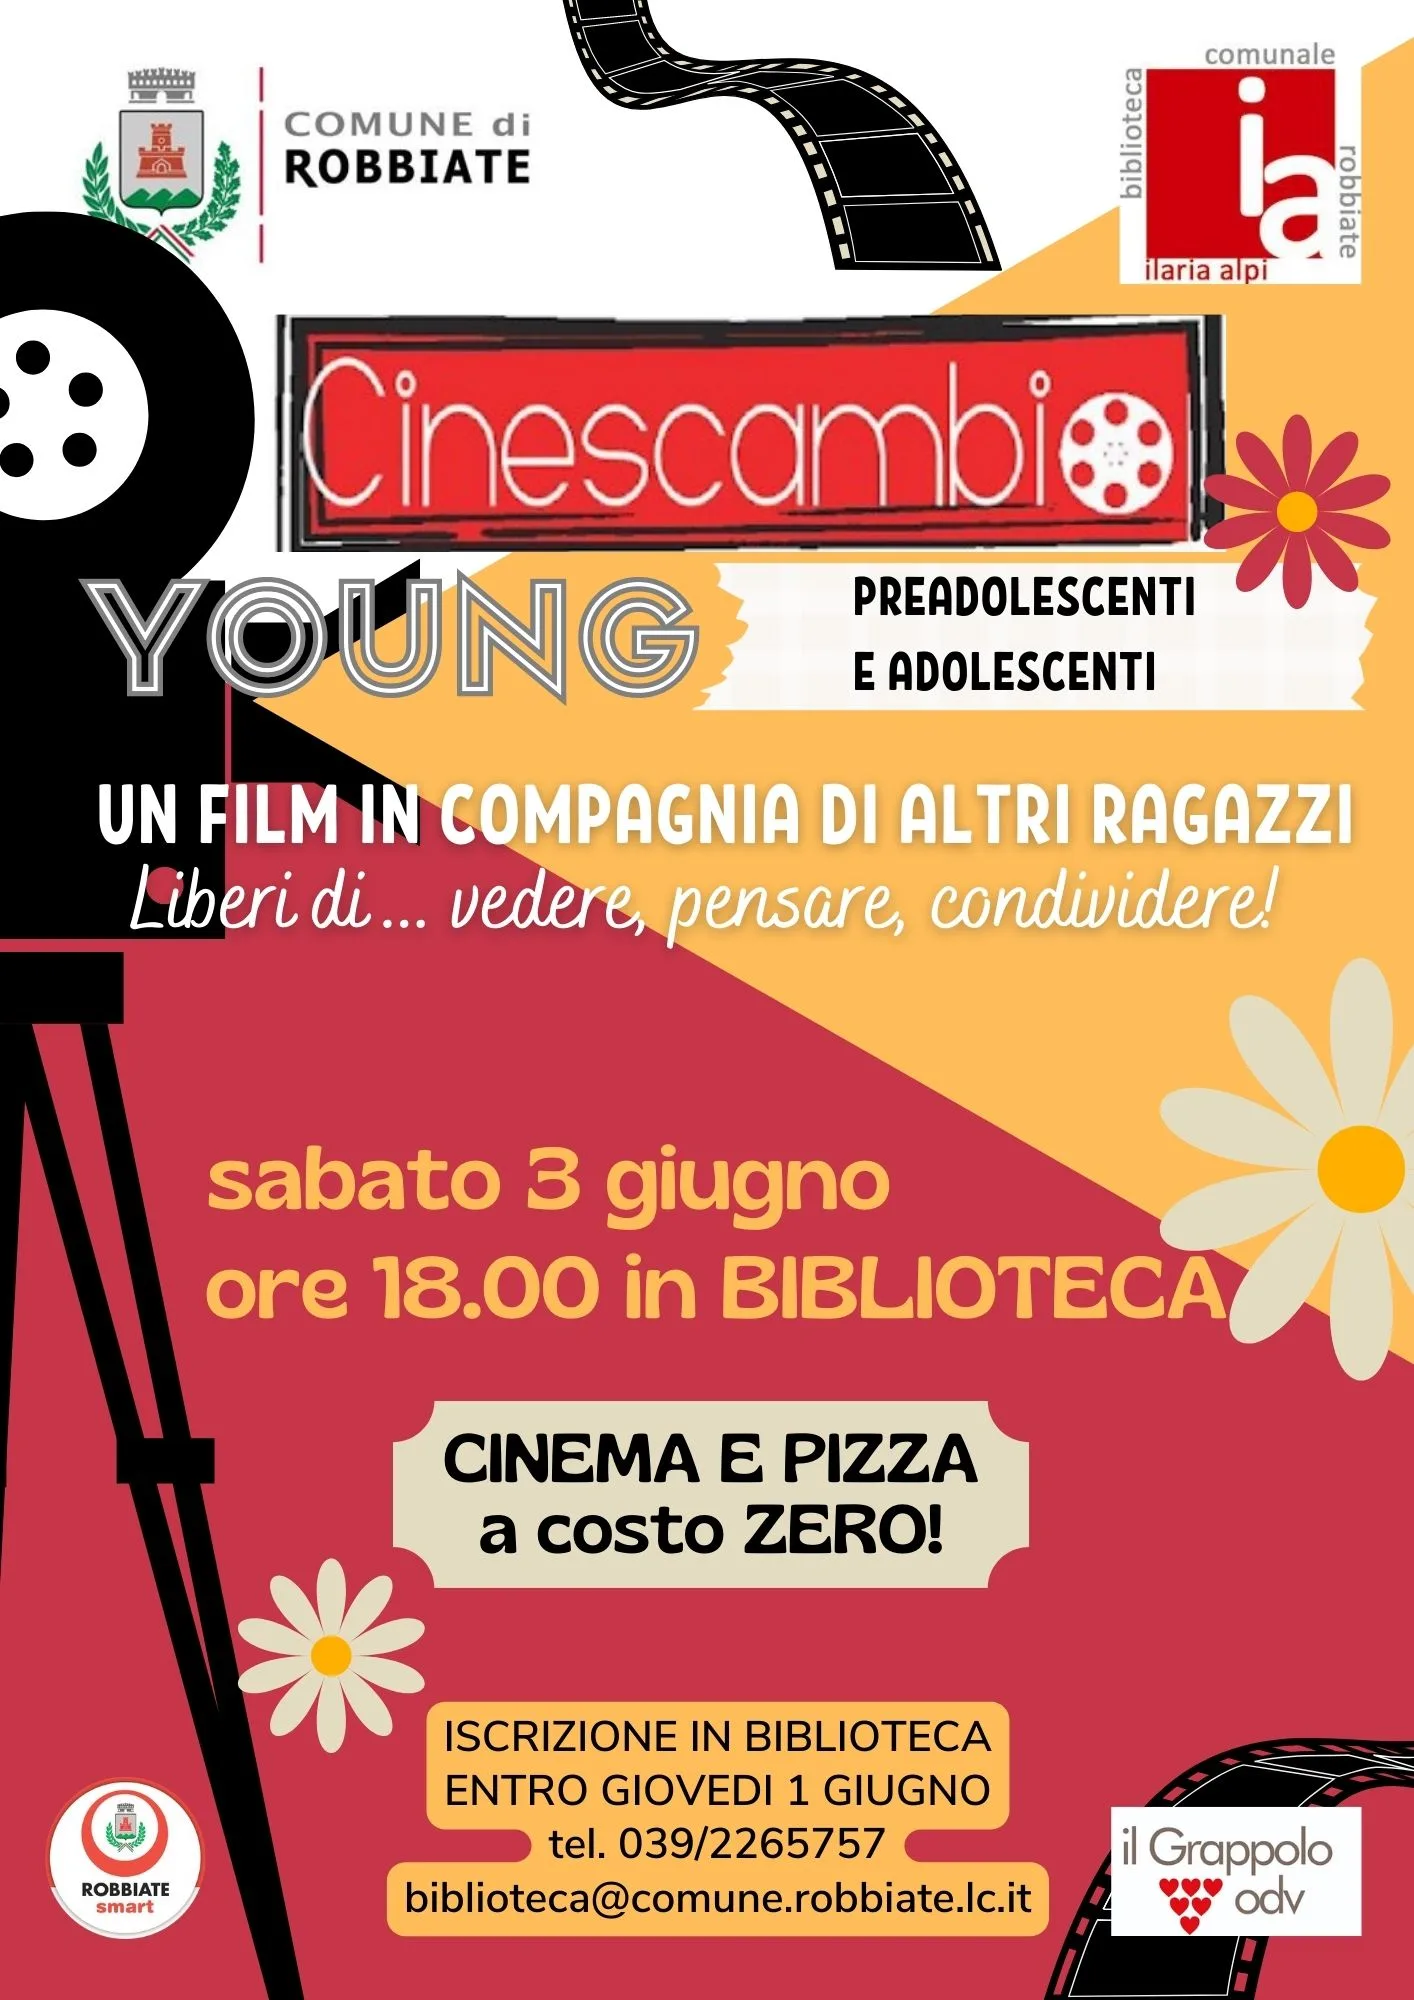 2023-06-03 Cinescambio young_GIUGNO 23